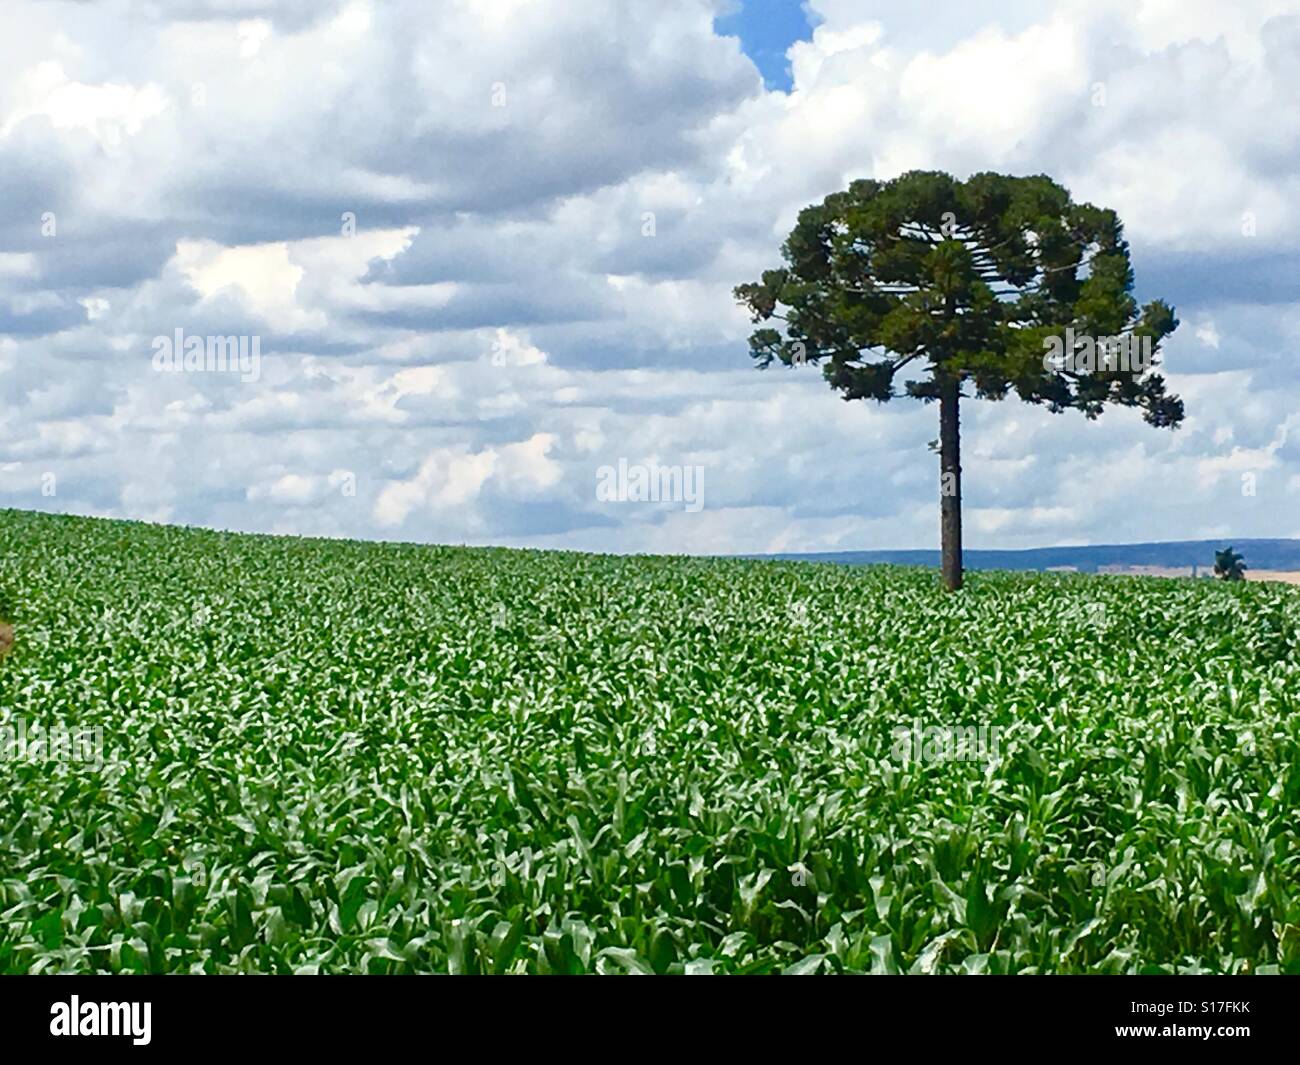 Amazing view of an araucária in corn plantation Stock Photo